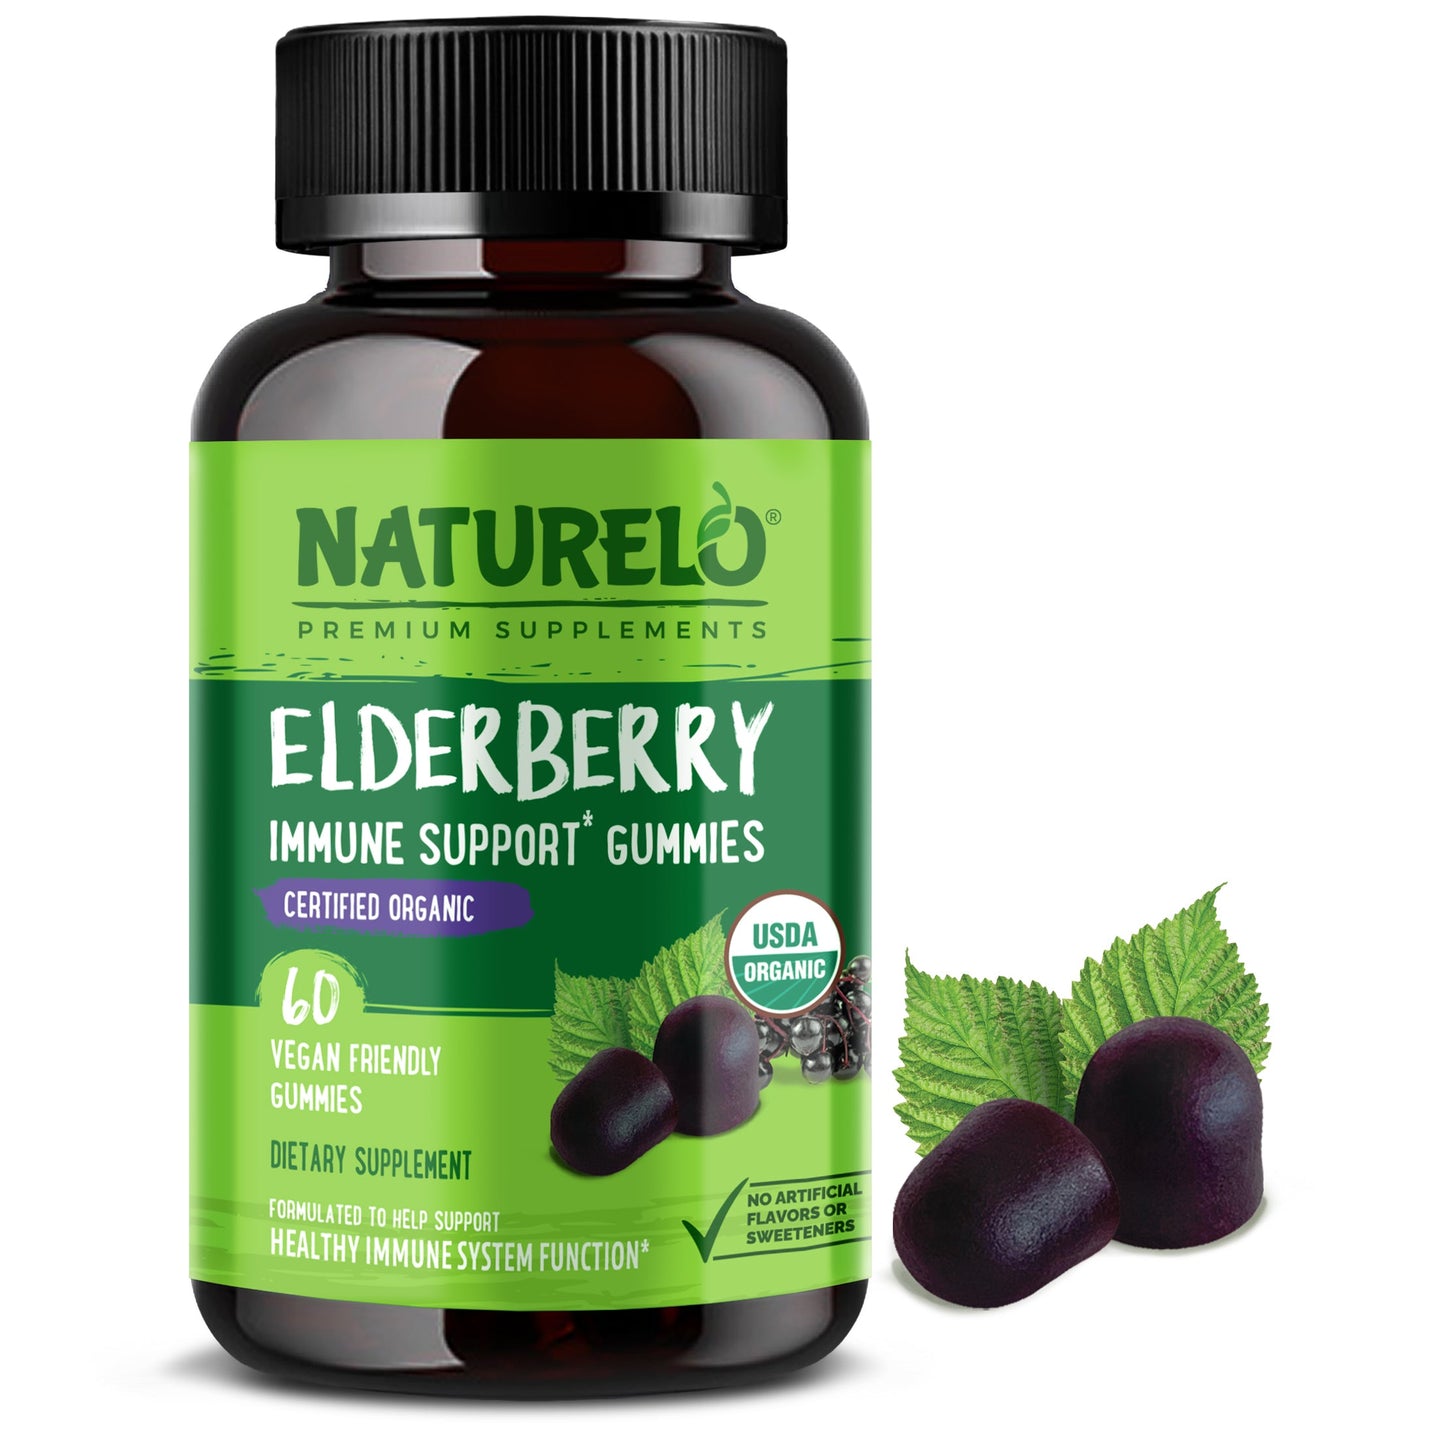 Elderberry Supplements for Immune Support